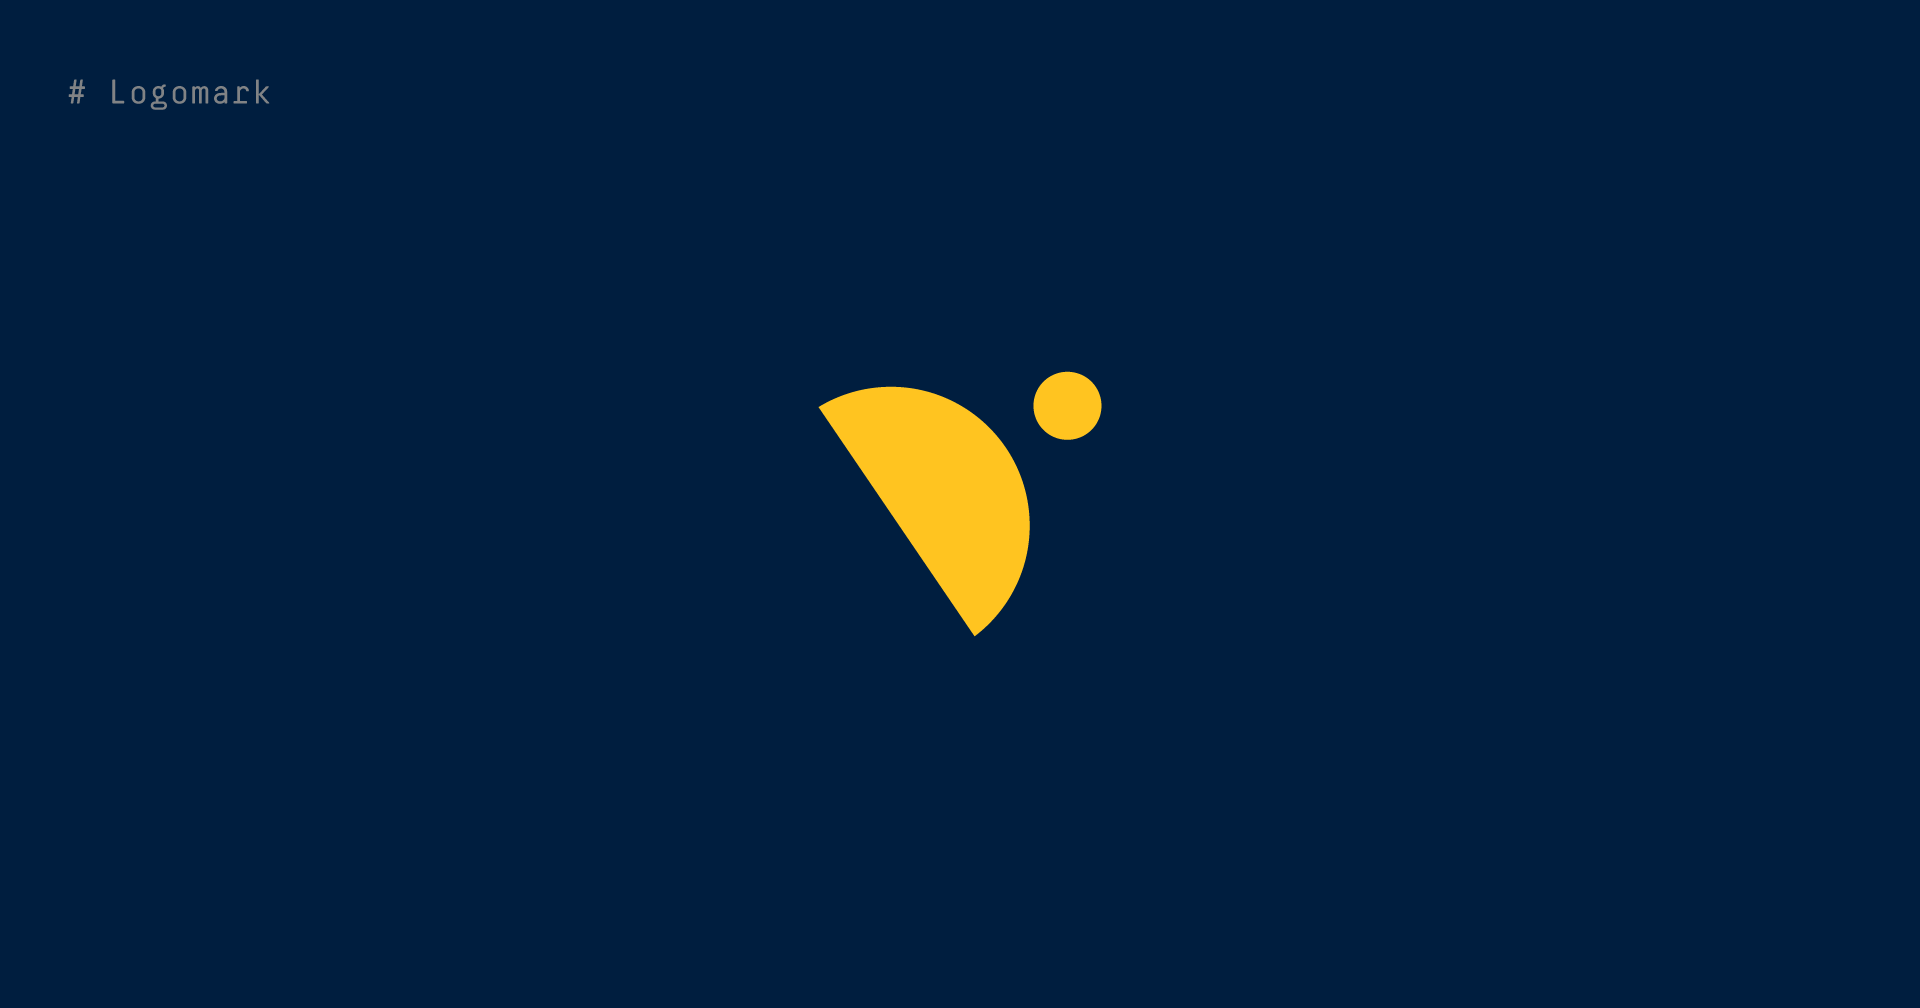 solis lab - logo / logomark design